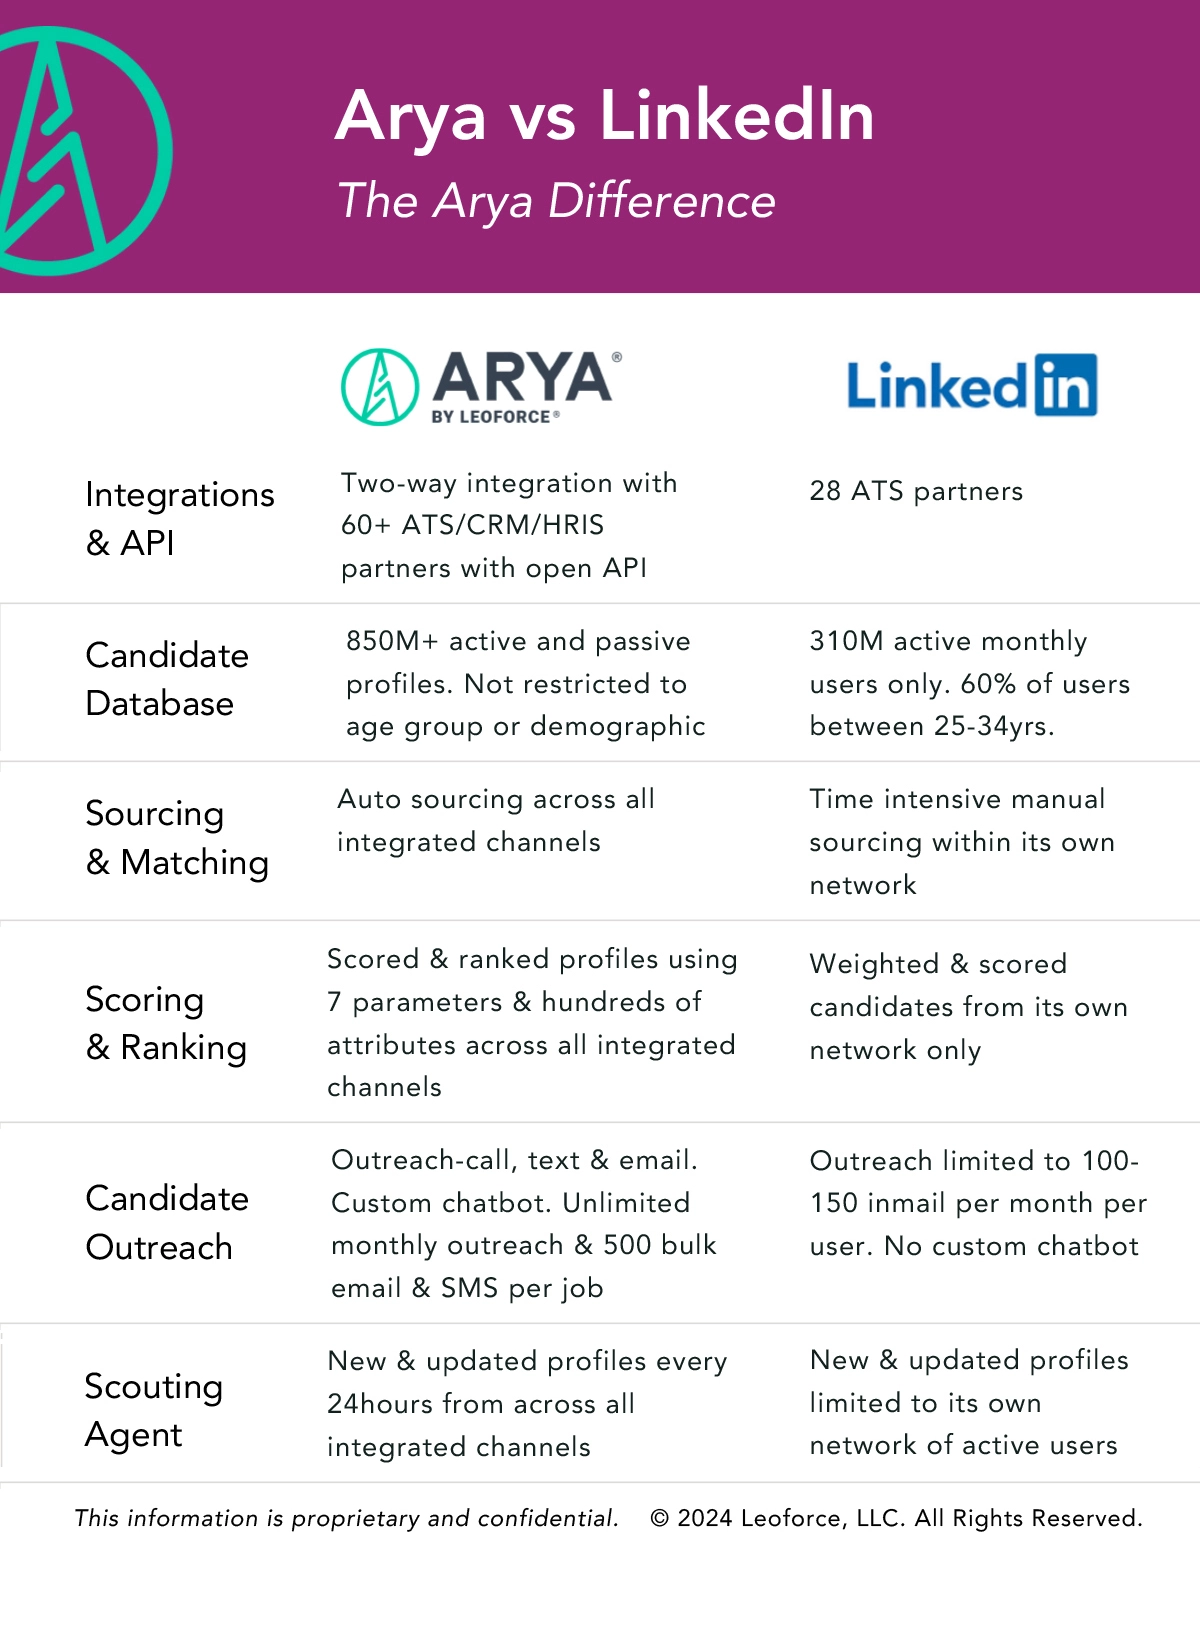 Arya vs LinkedIn comparison 